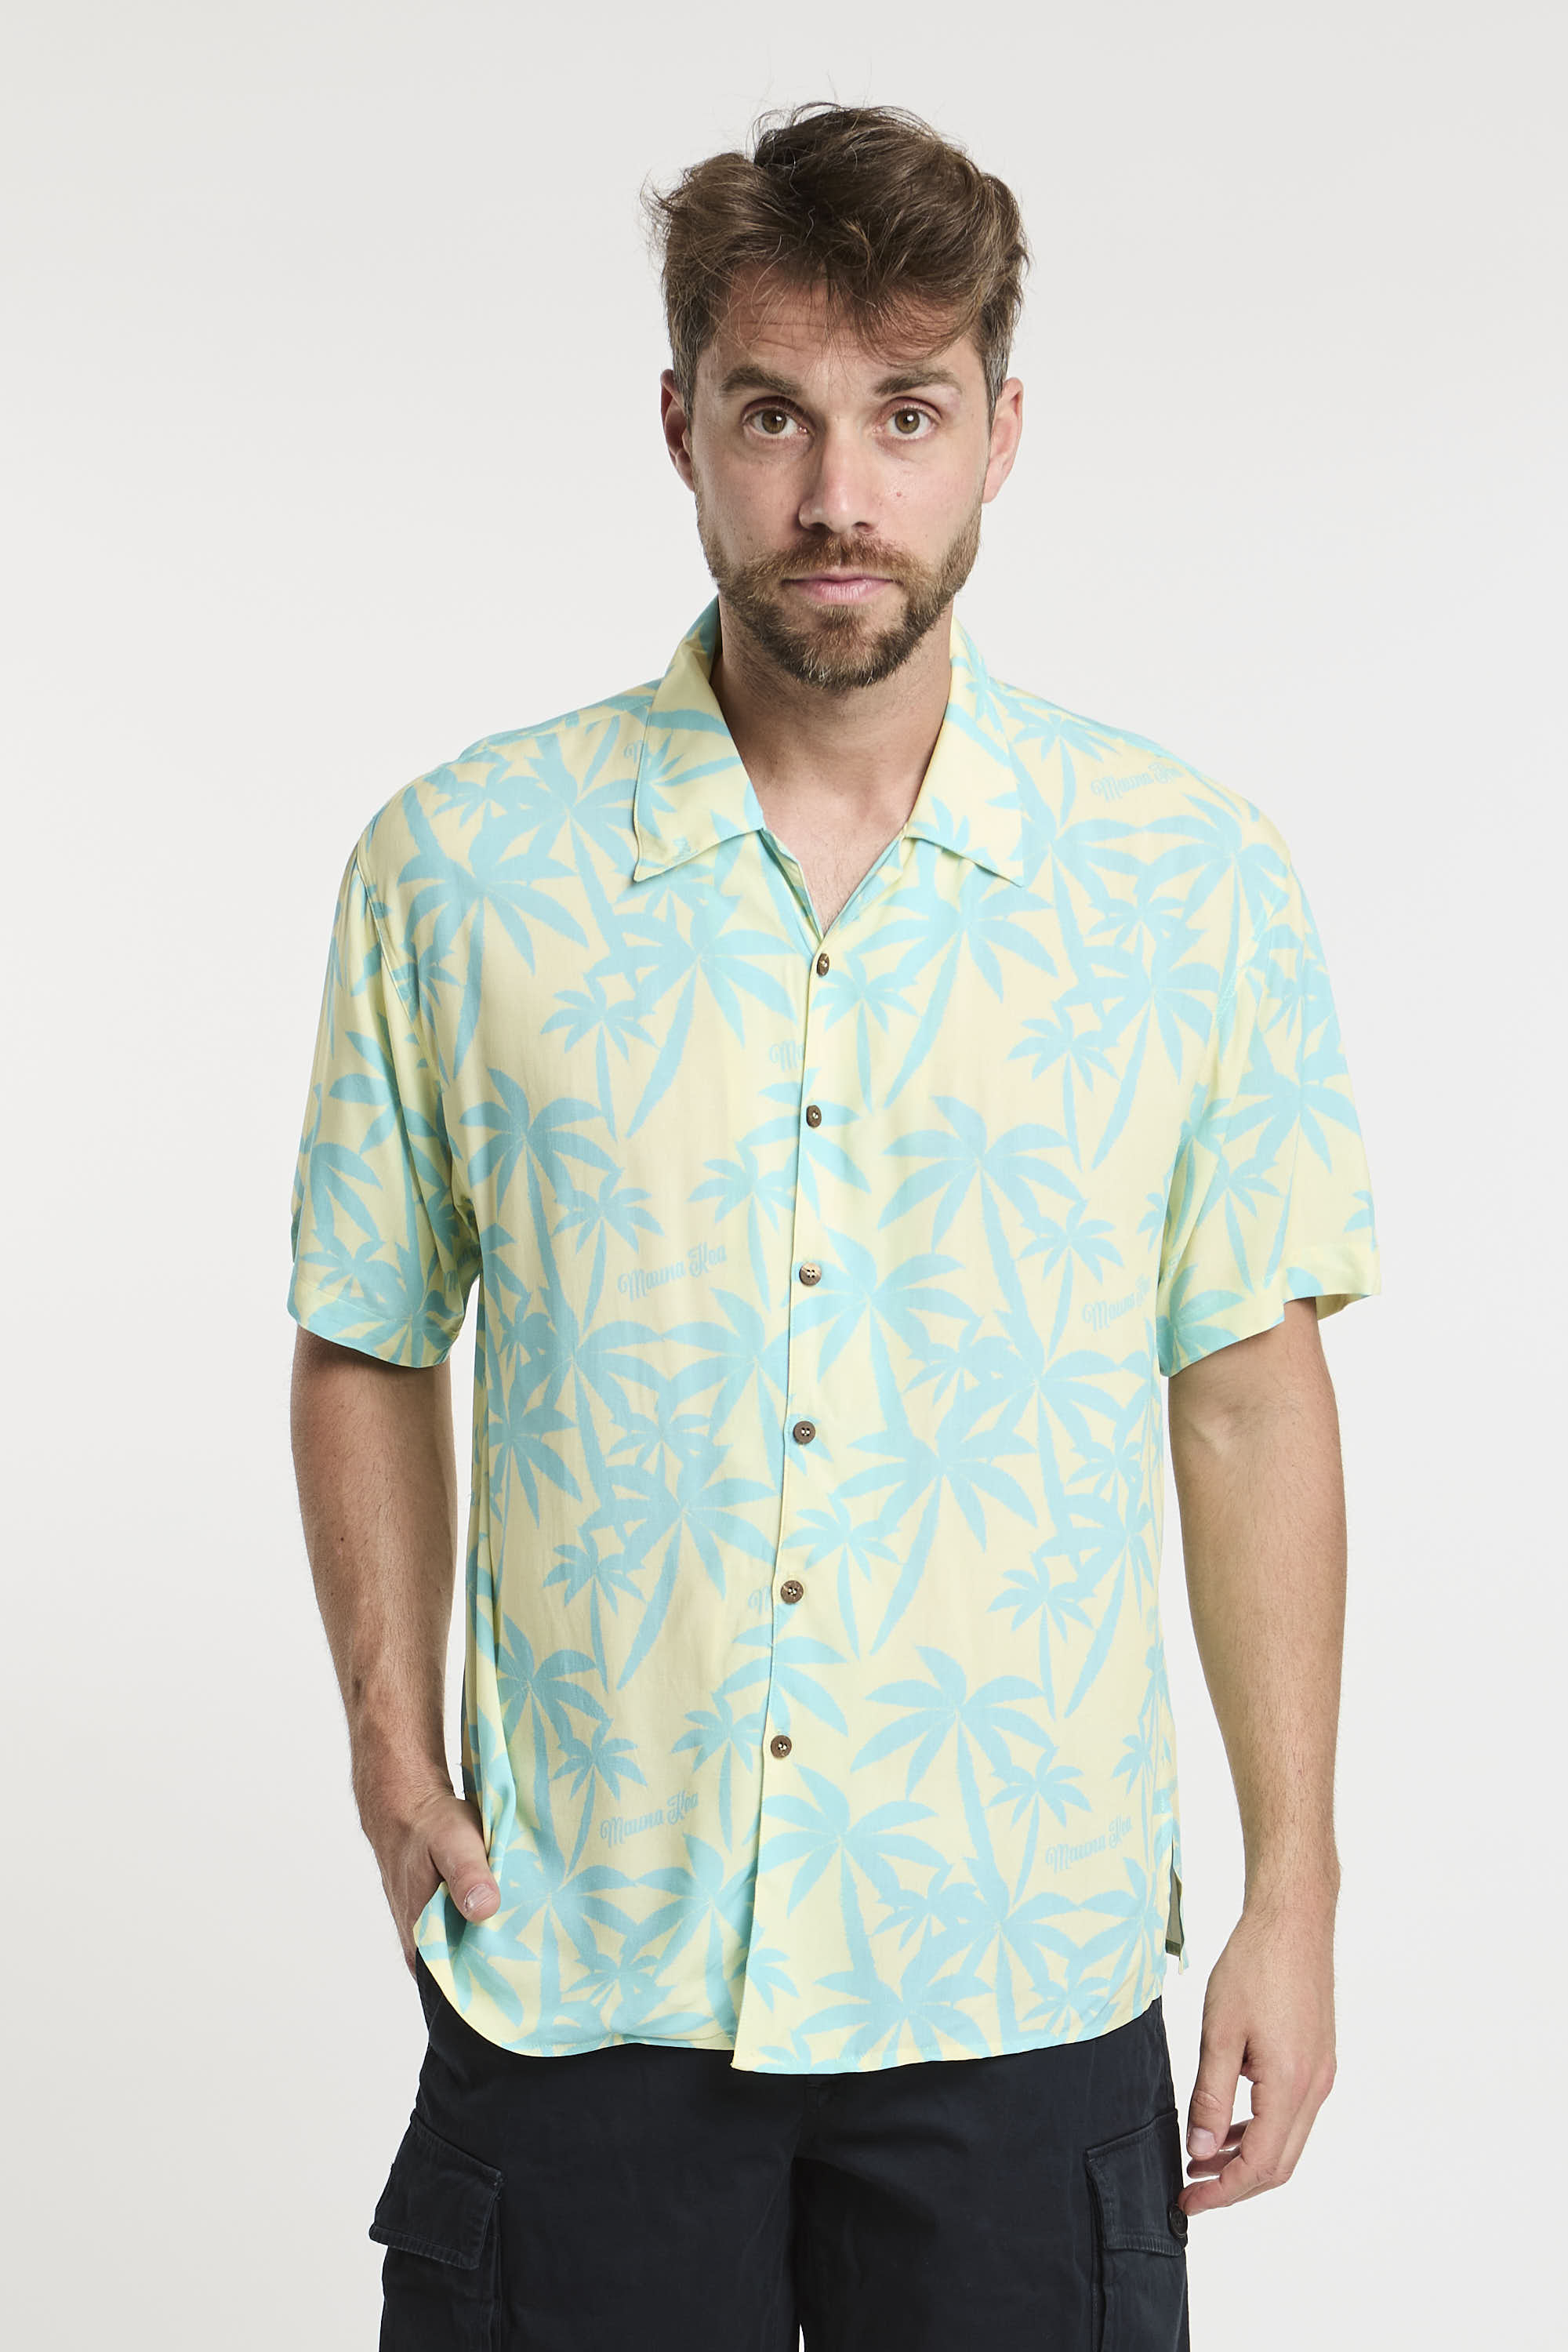 Mauna Kea Printed All Over Viscose Shirt in Yellow-1